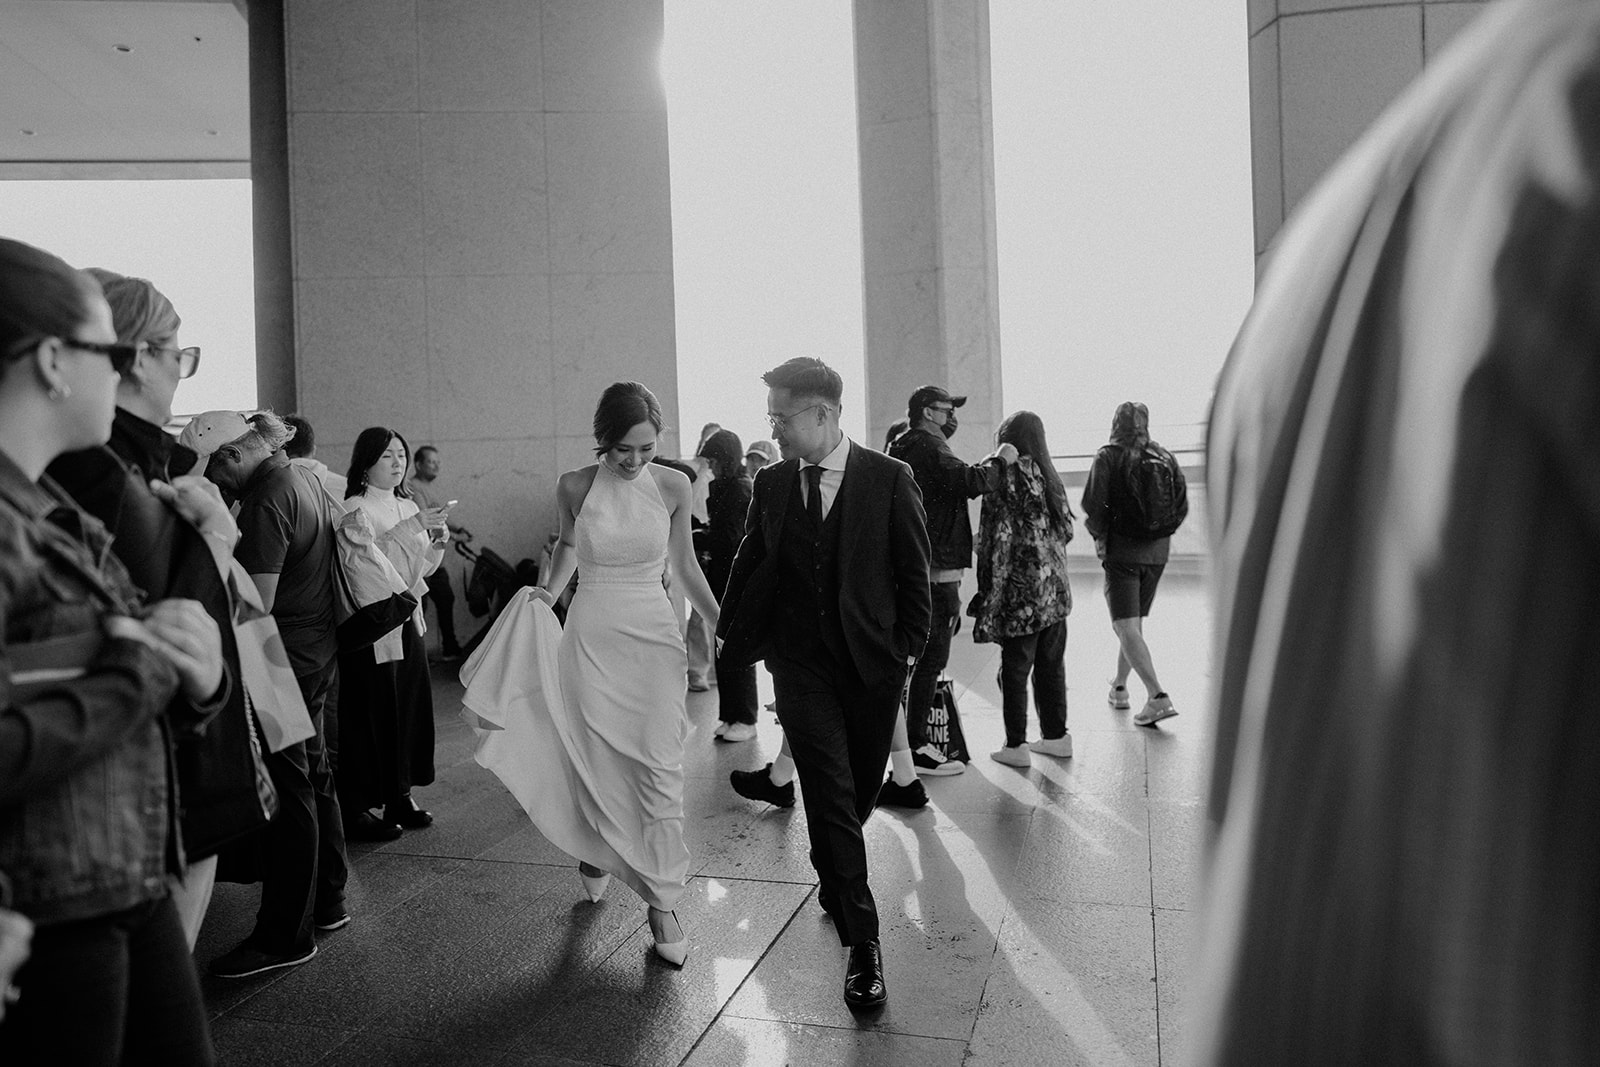 Bride and groom, walking through a crowd in Sydney city